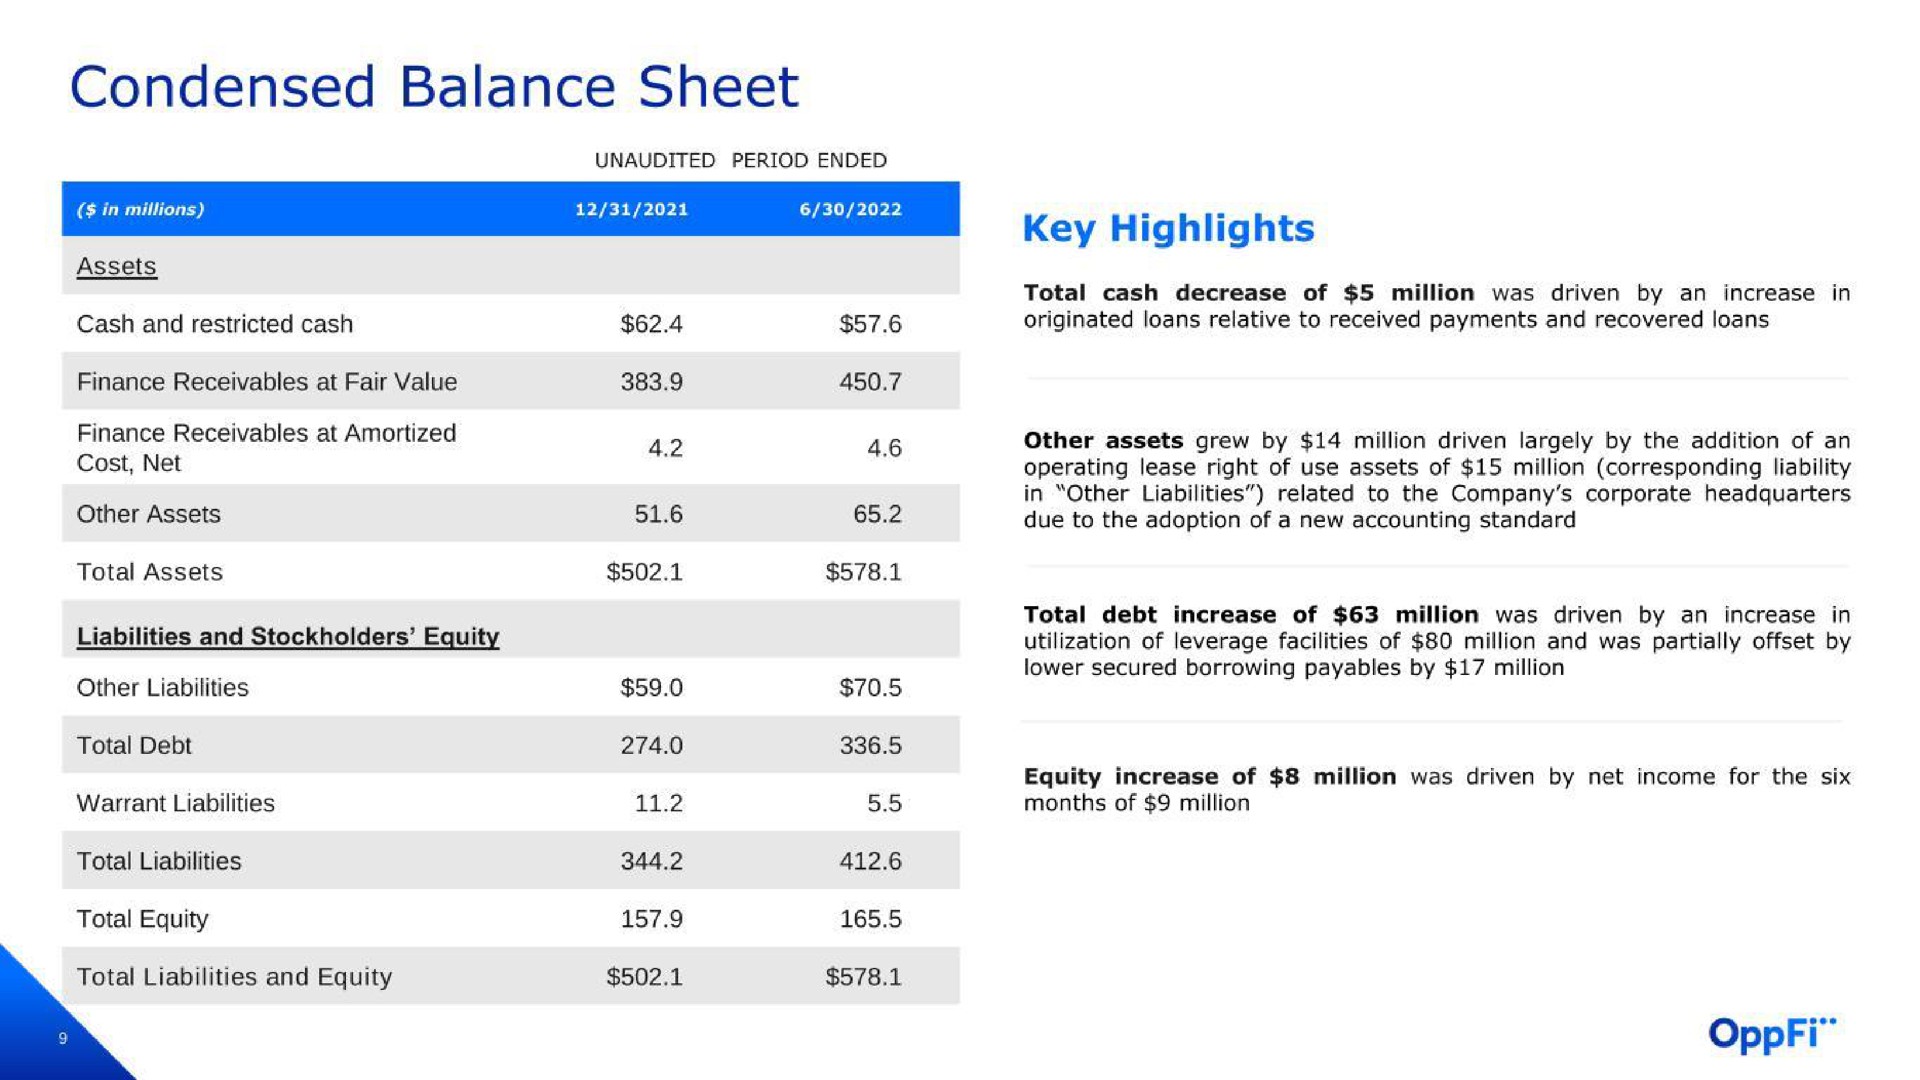 condensed balance sheet assets key highlights | OppFi